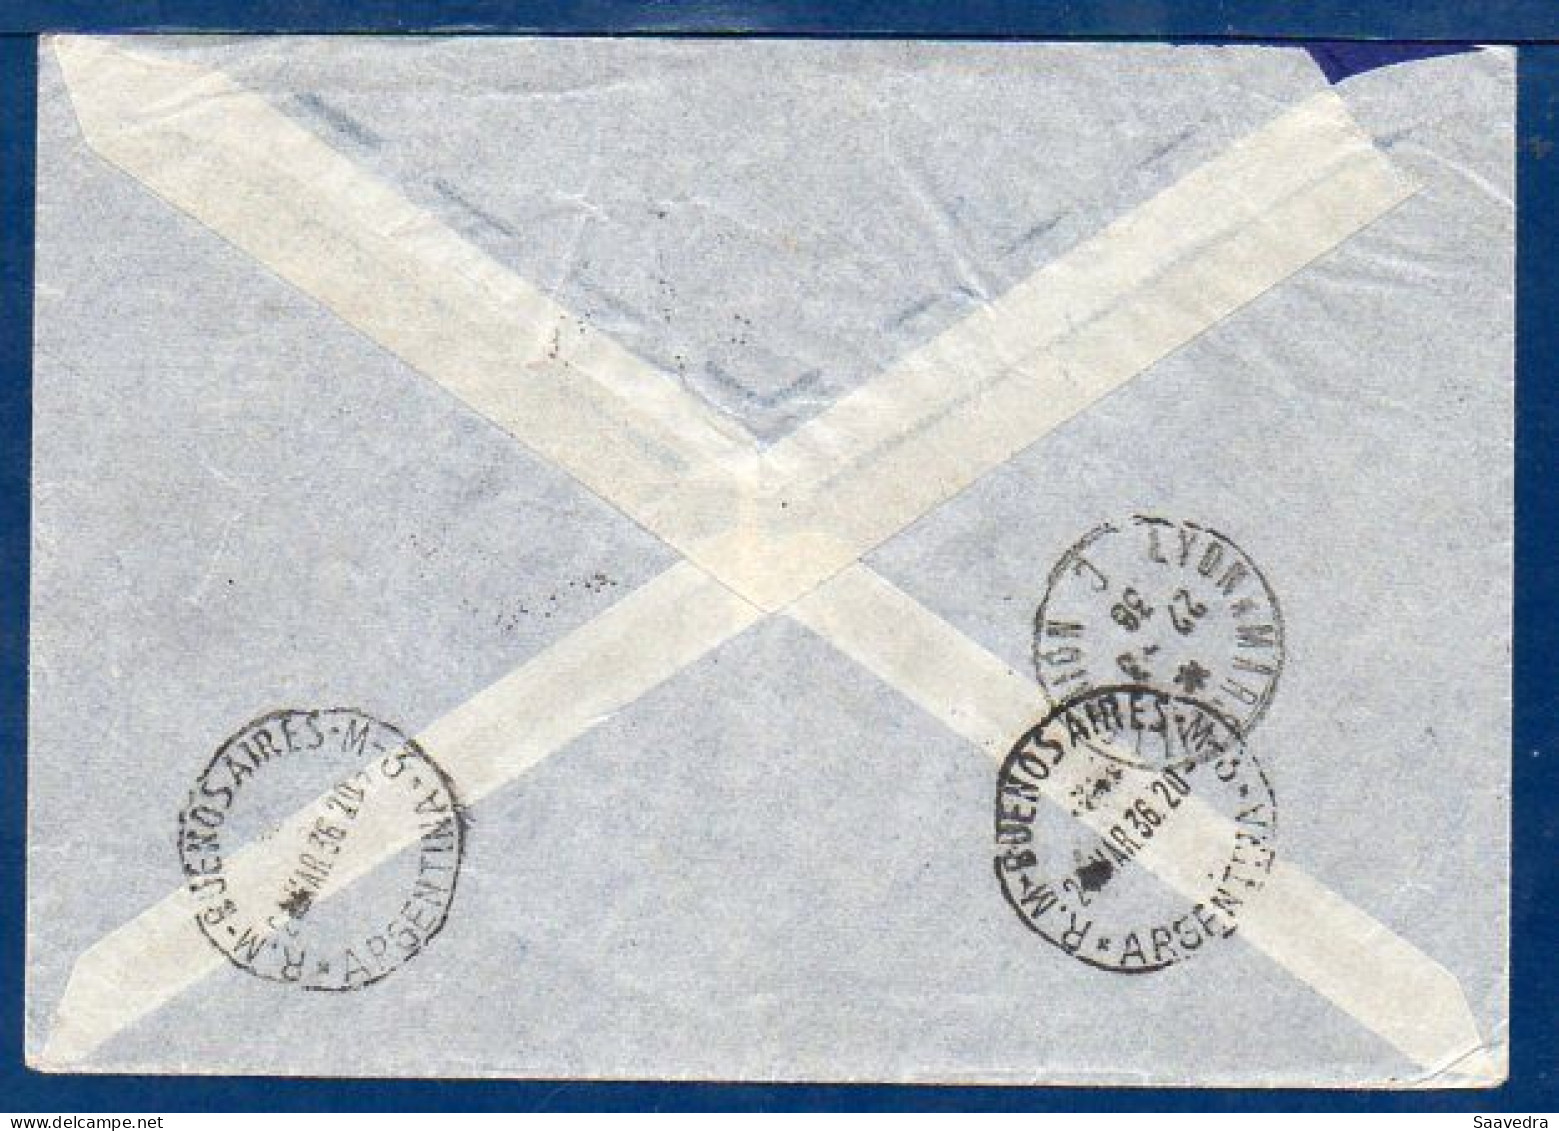 Switzerland To Argentina, 1936, Via Air France  (008) - Storia Postale